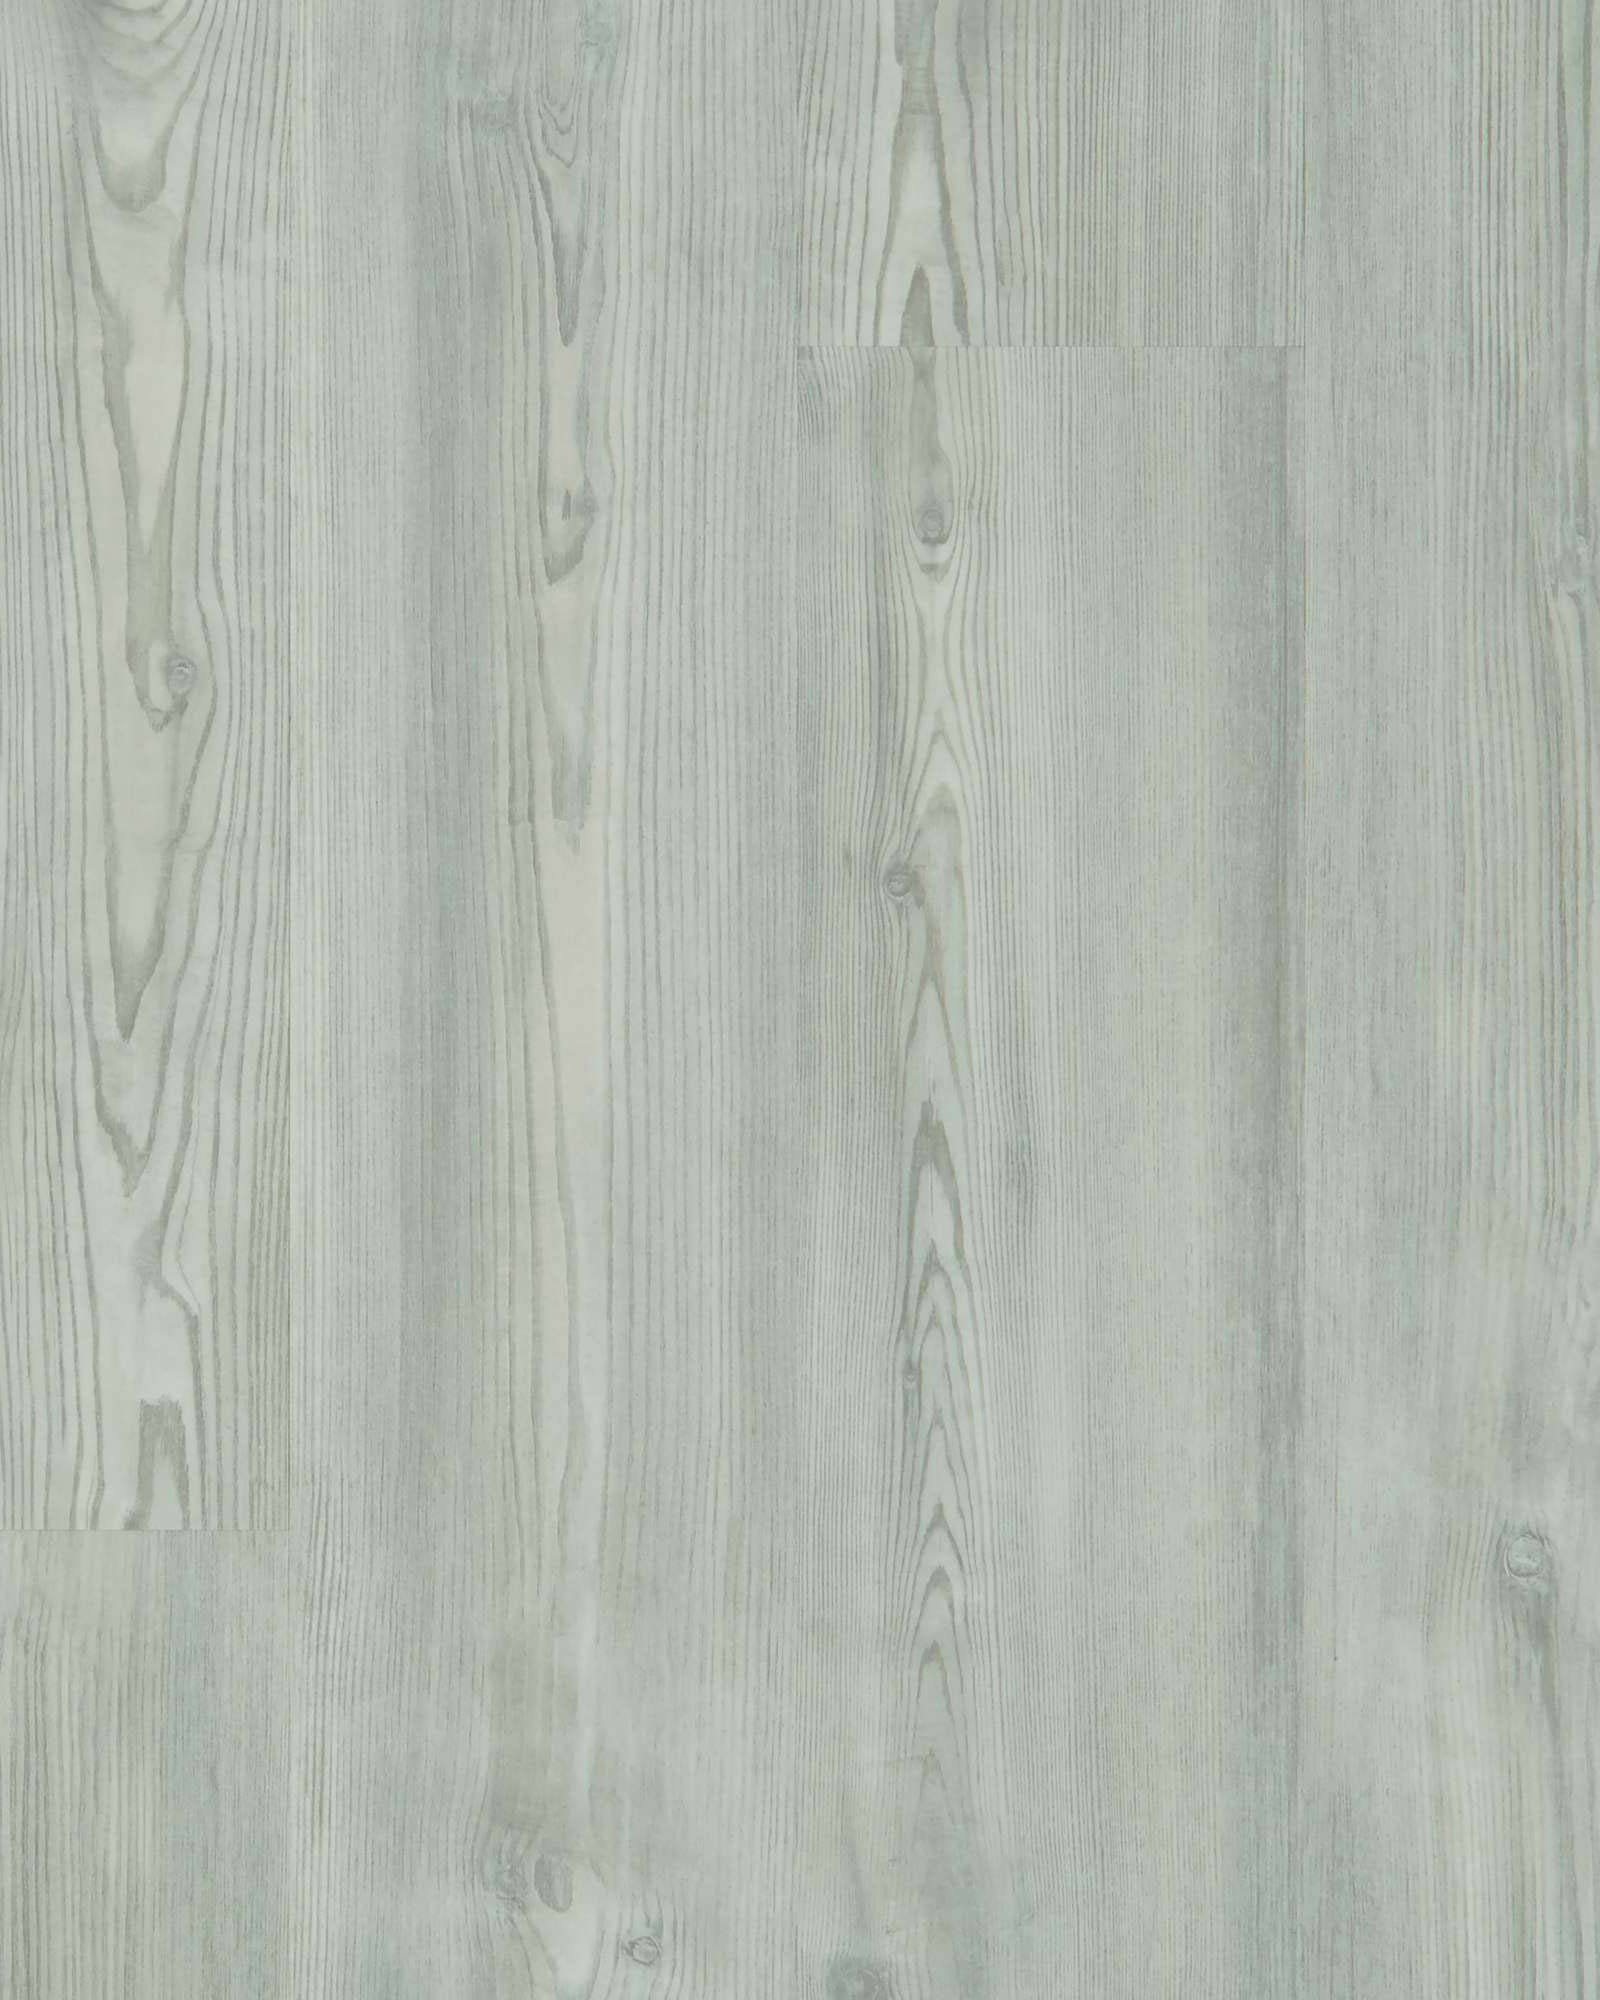 Anvil Plus Clean Pine, Shaw Vinyl Plank Flooring Cleaning